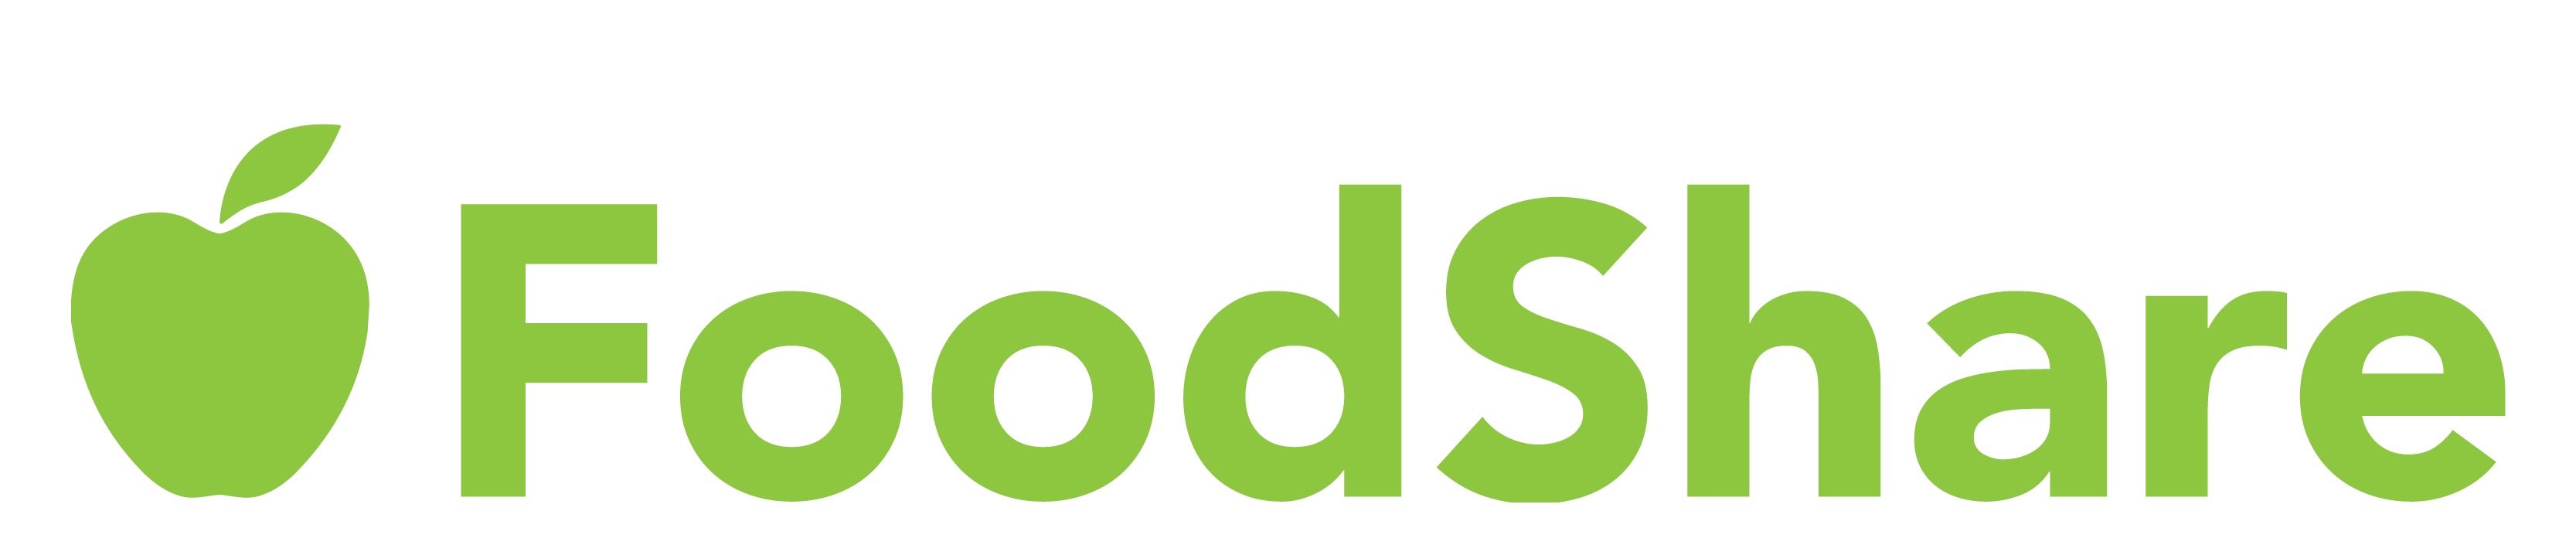 FoodShare logo